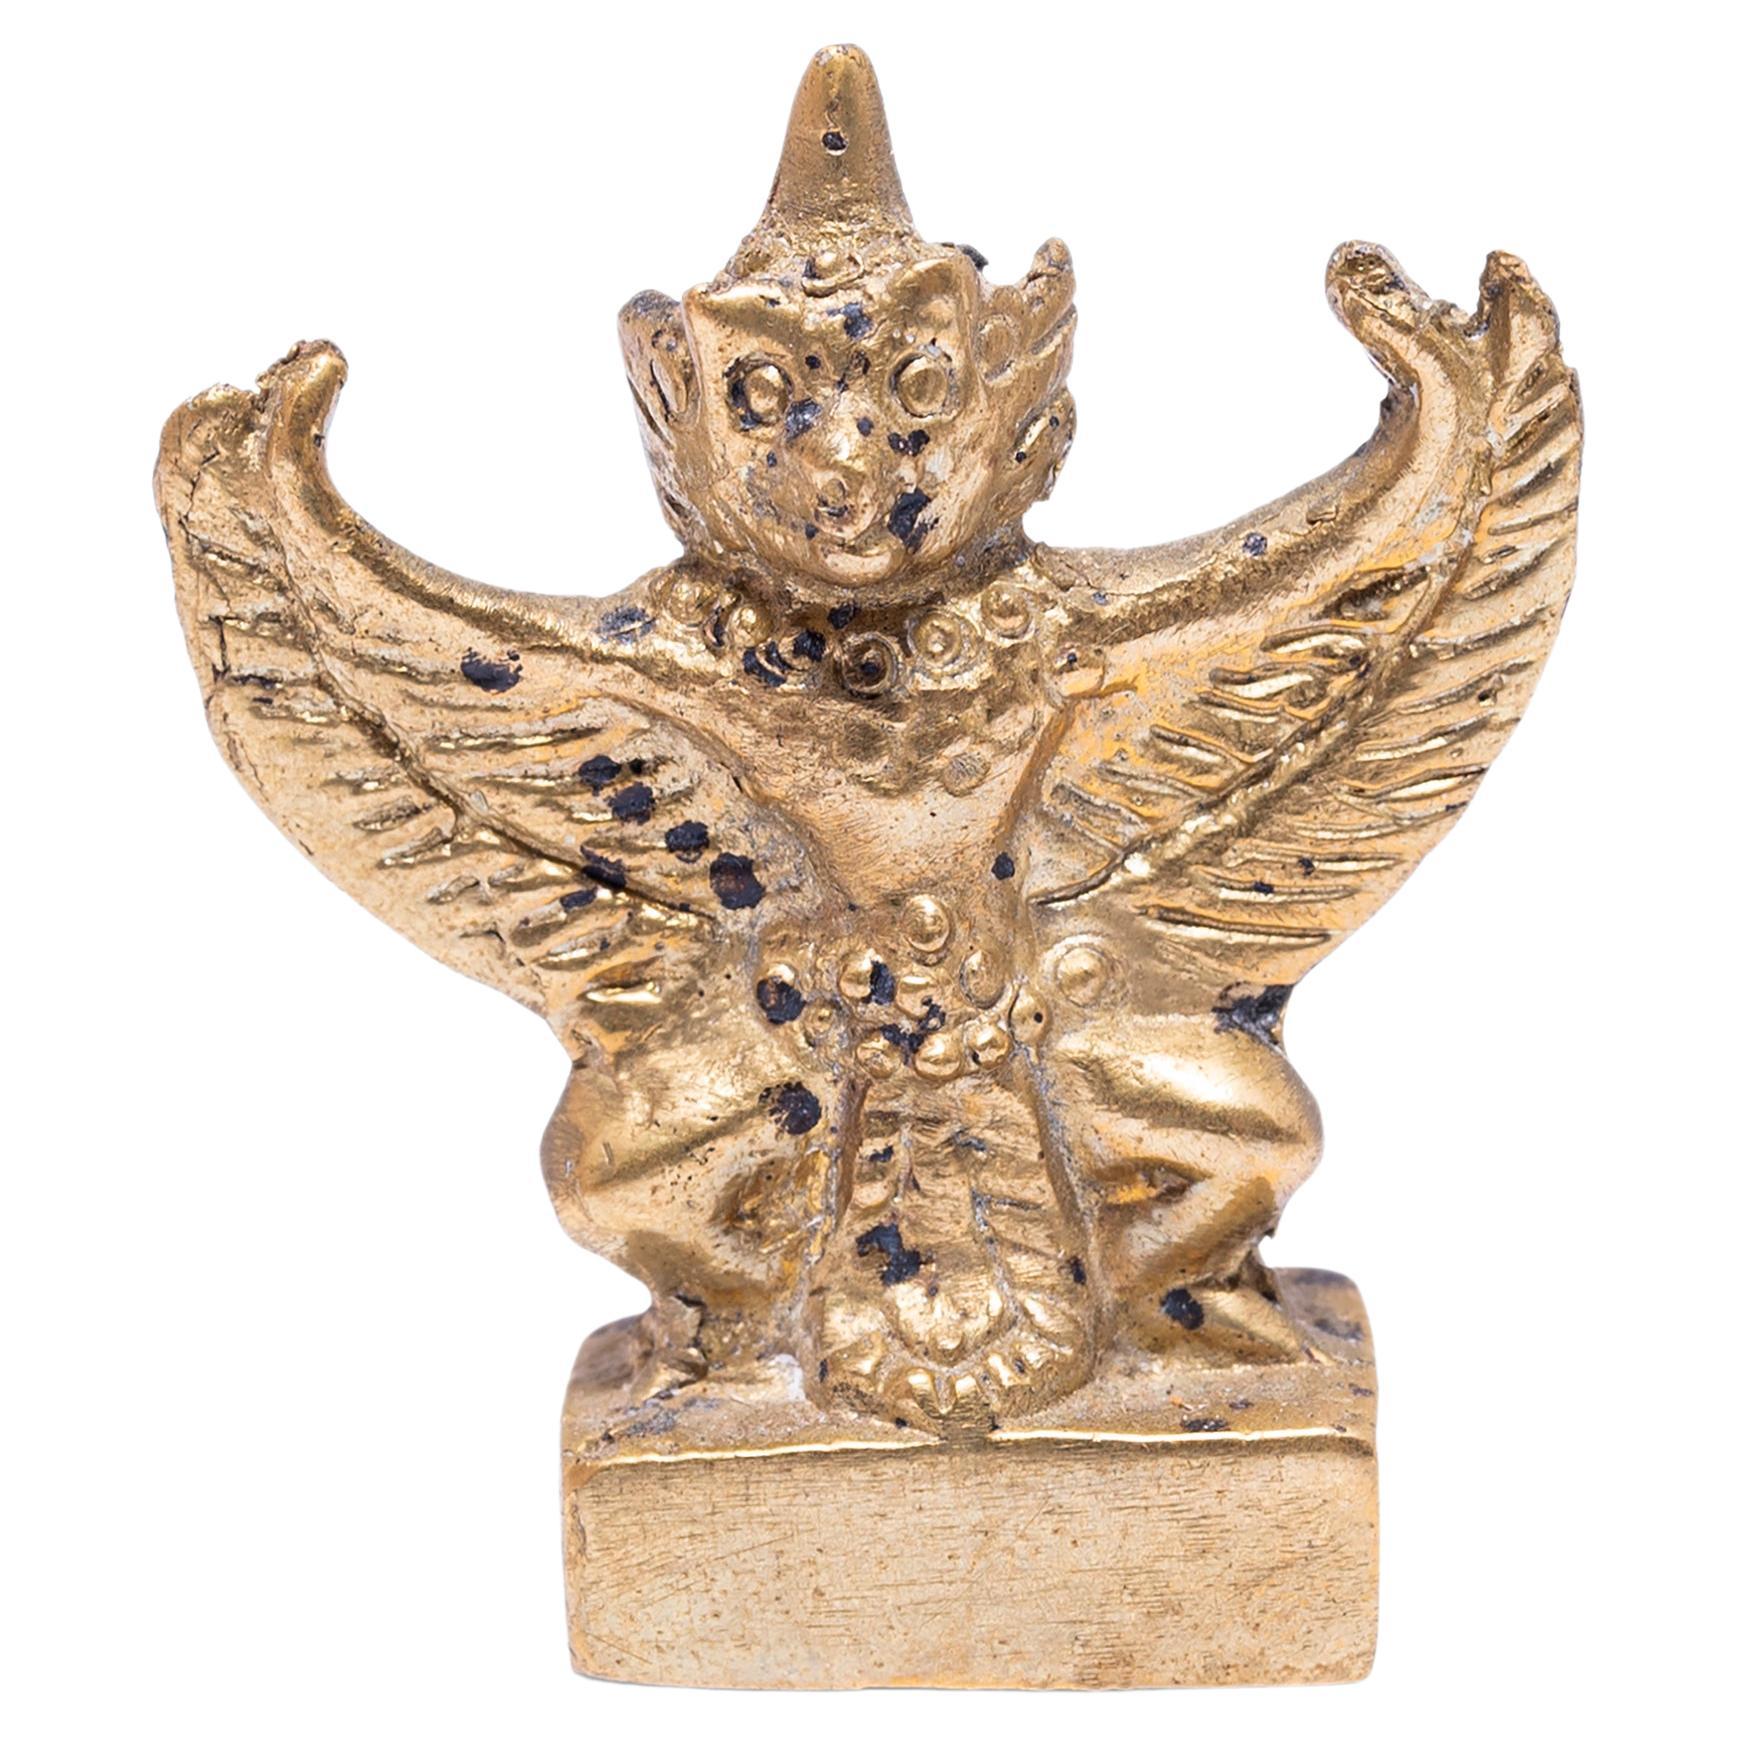 Bronze Garuda Figurine, circa 1900